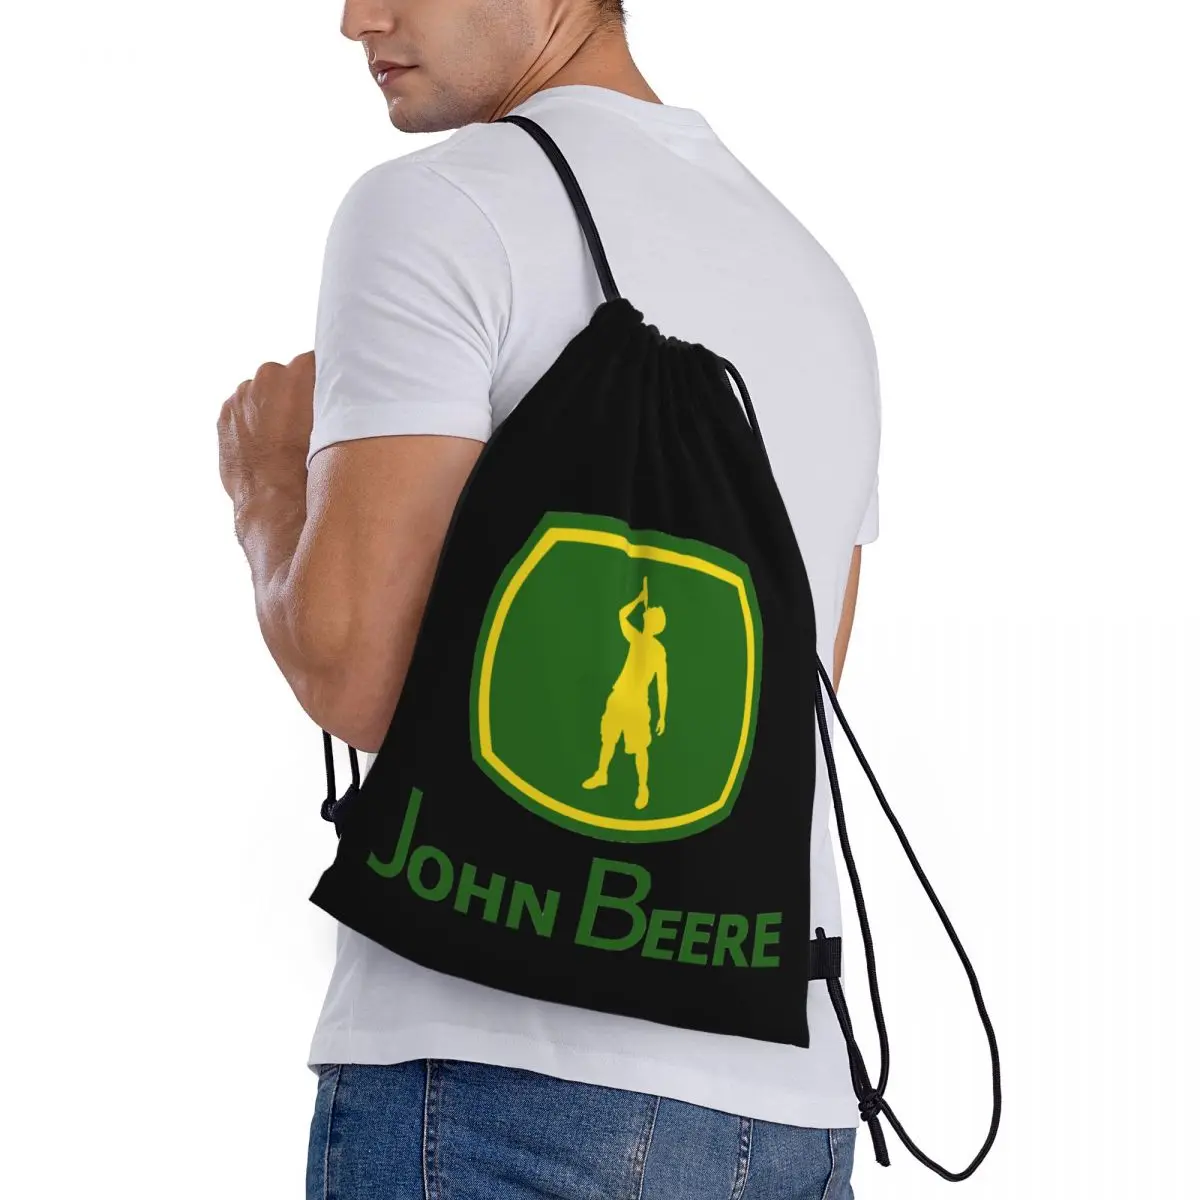 John Beere Funny Beer Lover Camping Gift Funny Drawstring Bags Gym Bag Infantry pack Patogi kuprinė Juokinga naujovė Nuotrauka 1